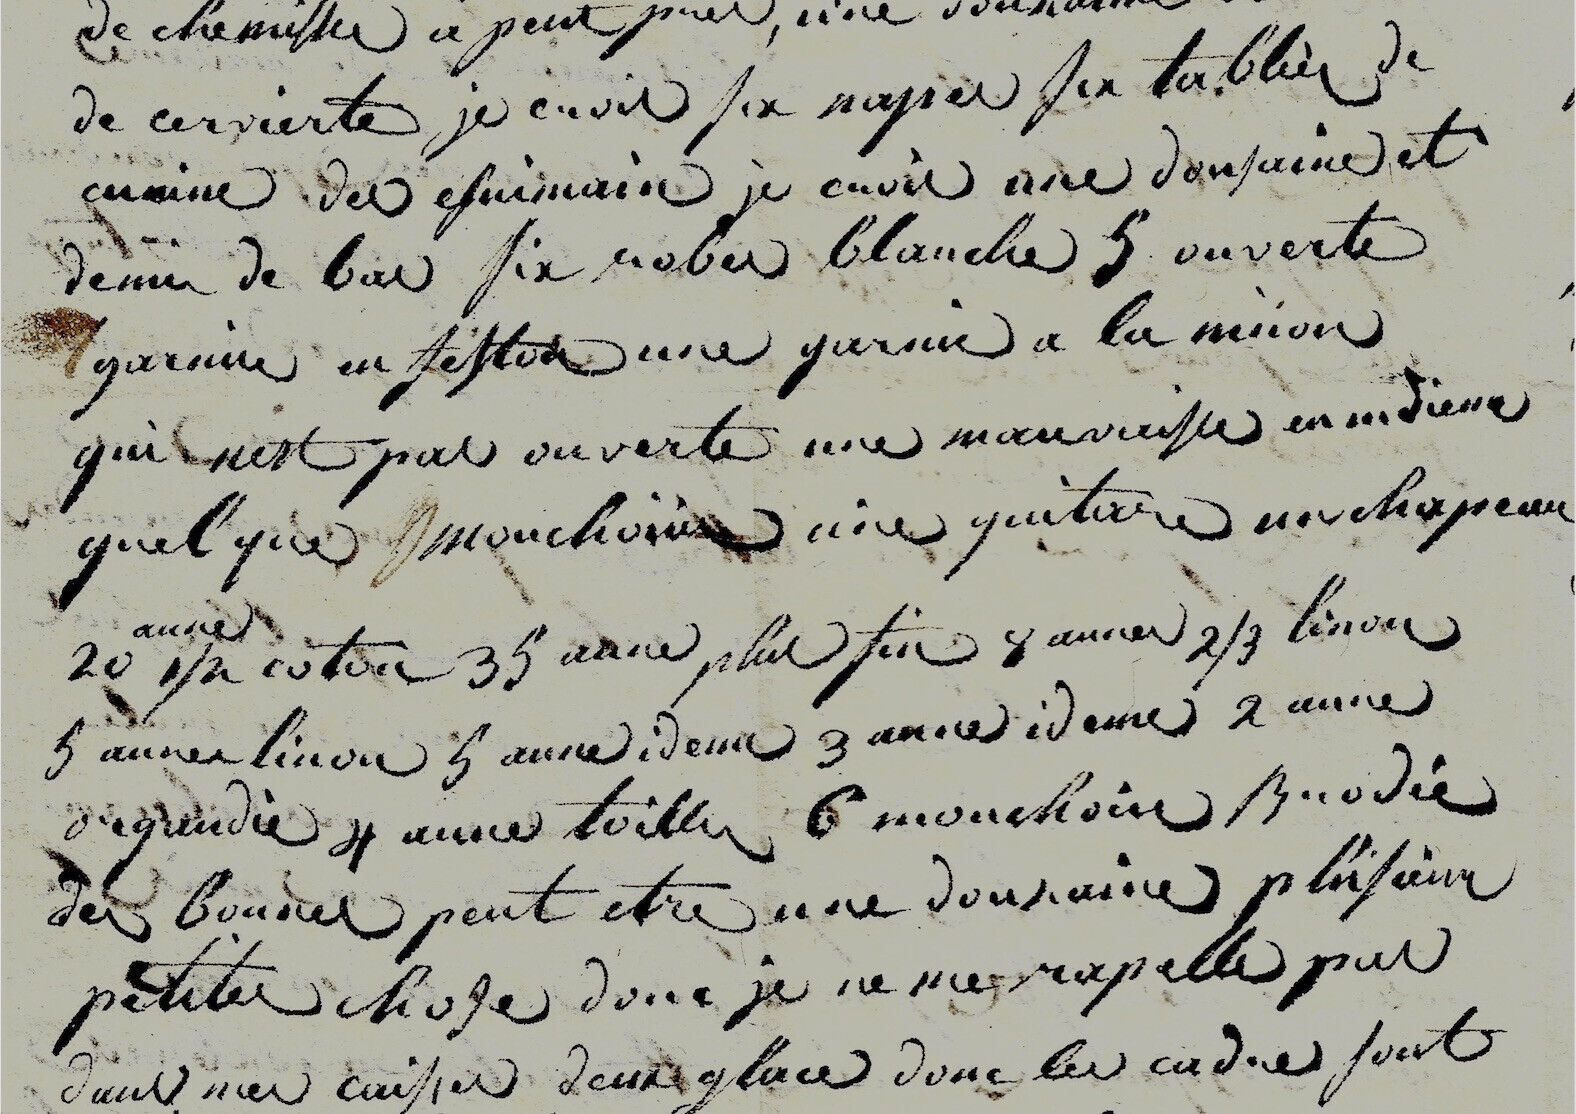 1813 Letter from La Chaux-de-Fonds to Besançon, seizure of personal effects of 1 lady